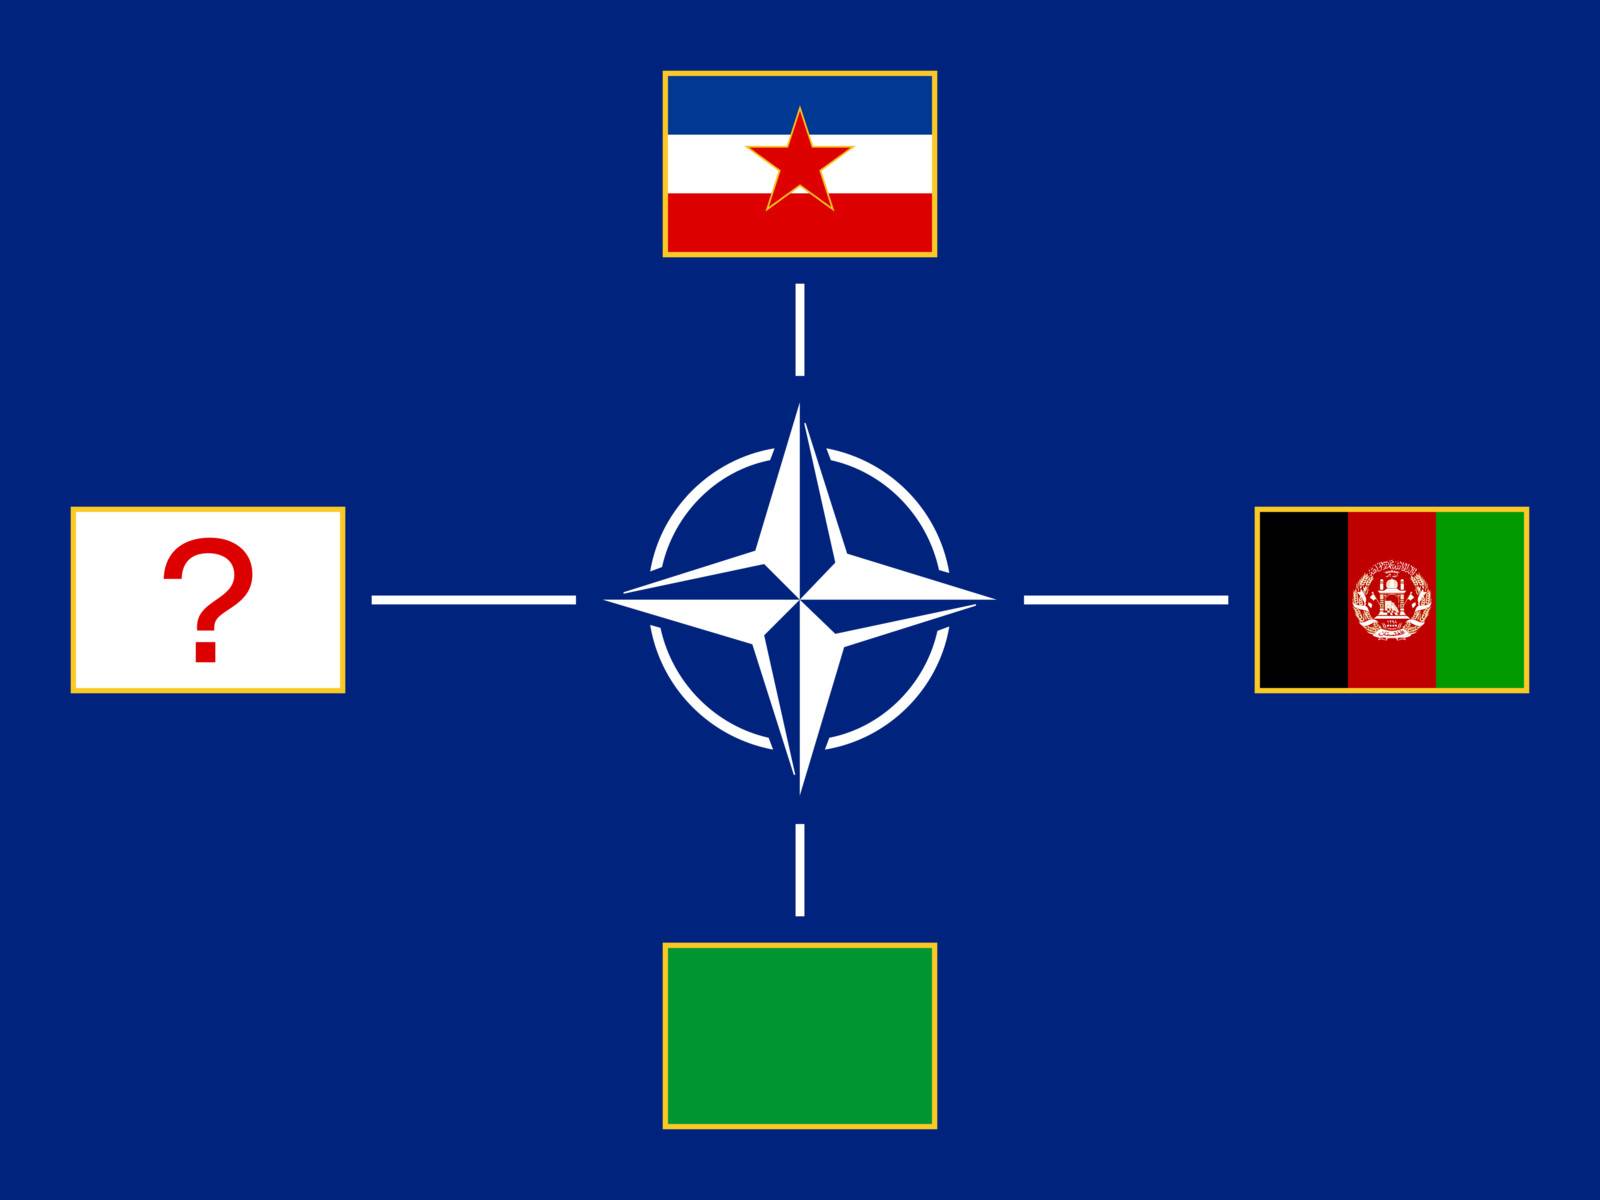 Illustration for NATO's military operation in Libya